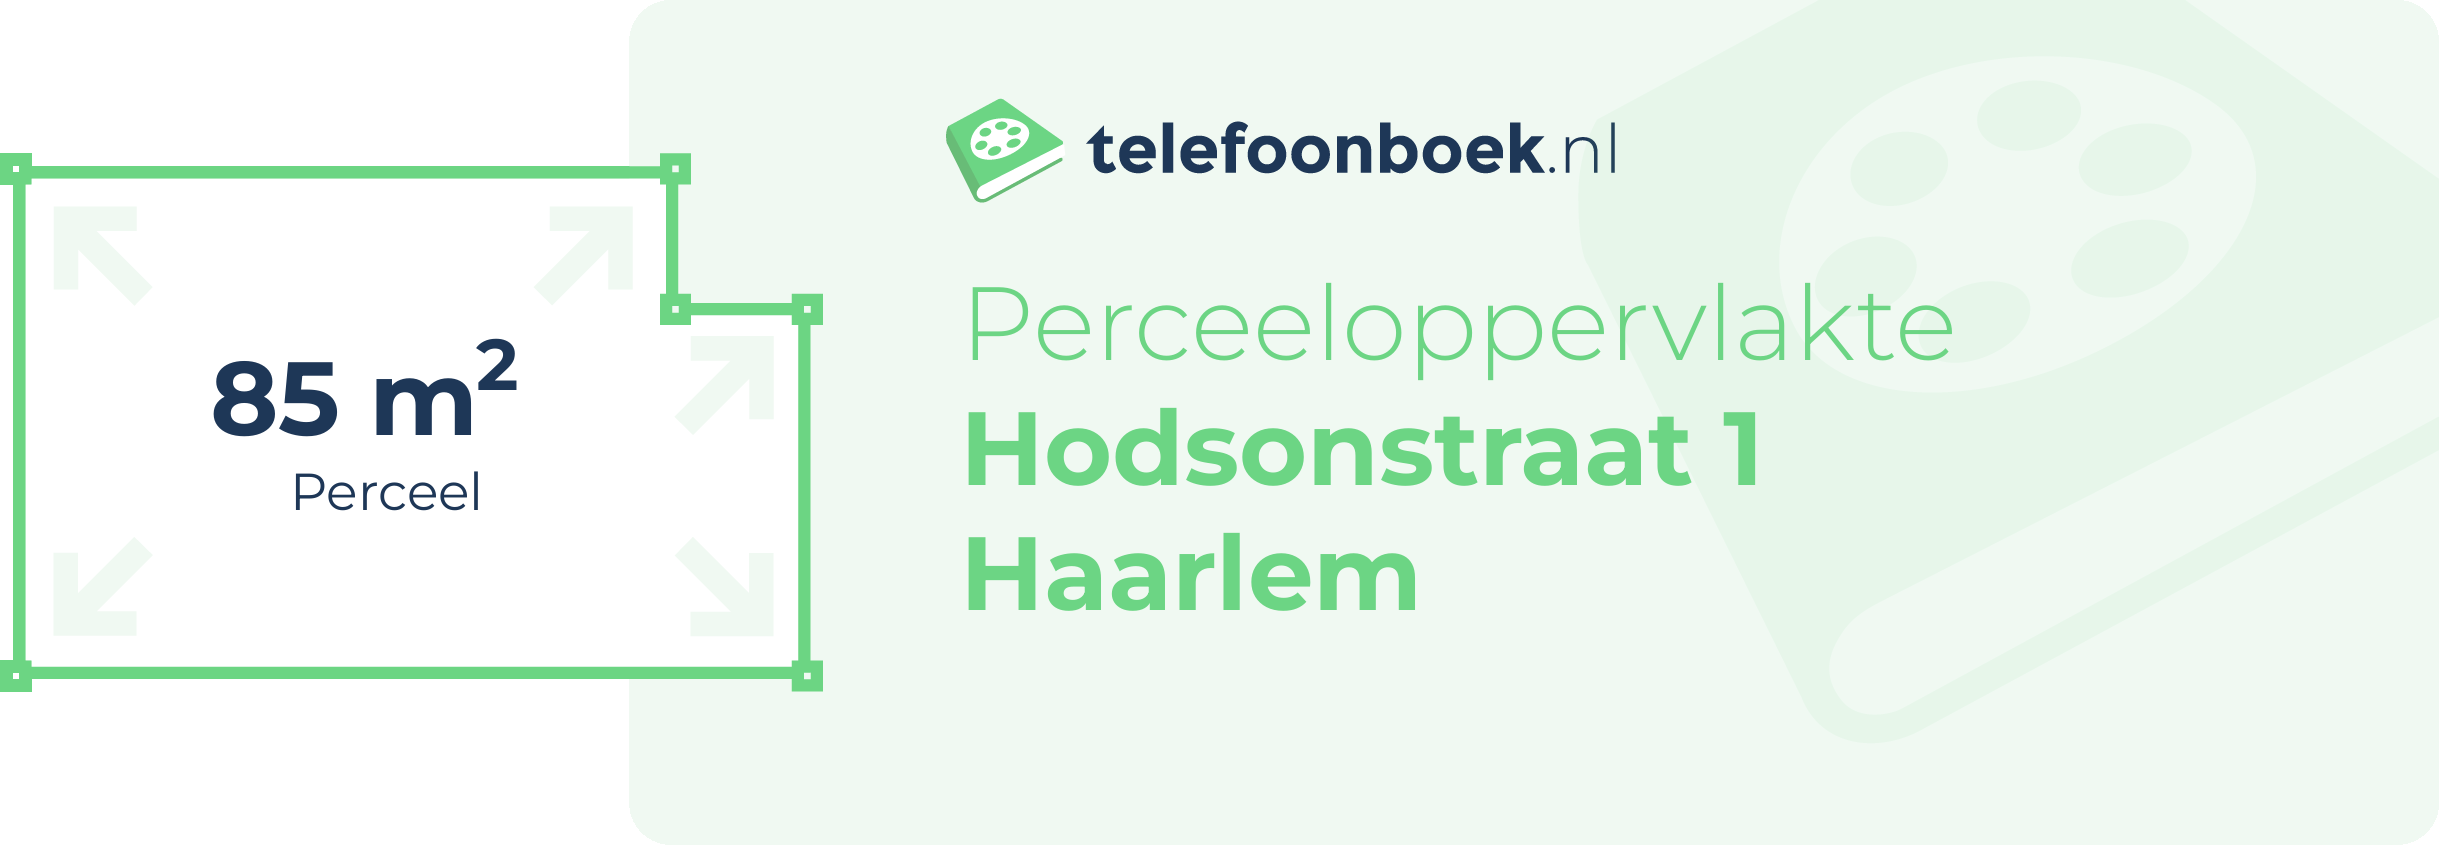 Perceeloppervlakte Hodsonstraat 1 Haarlem